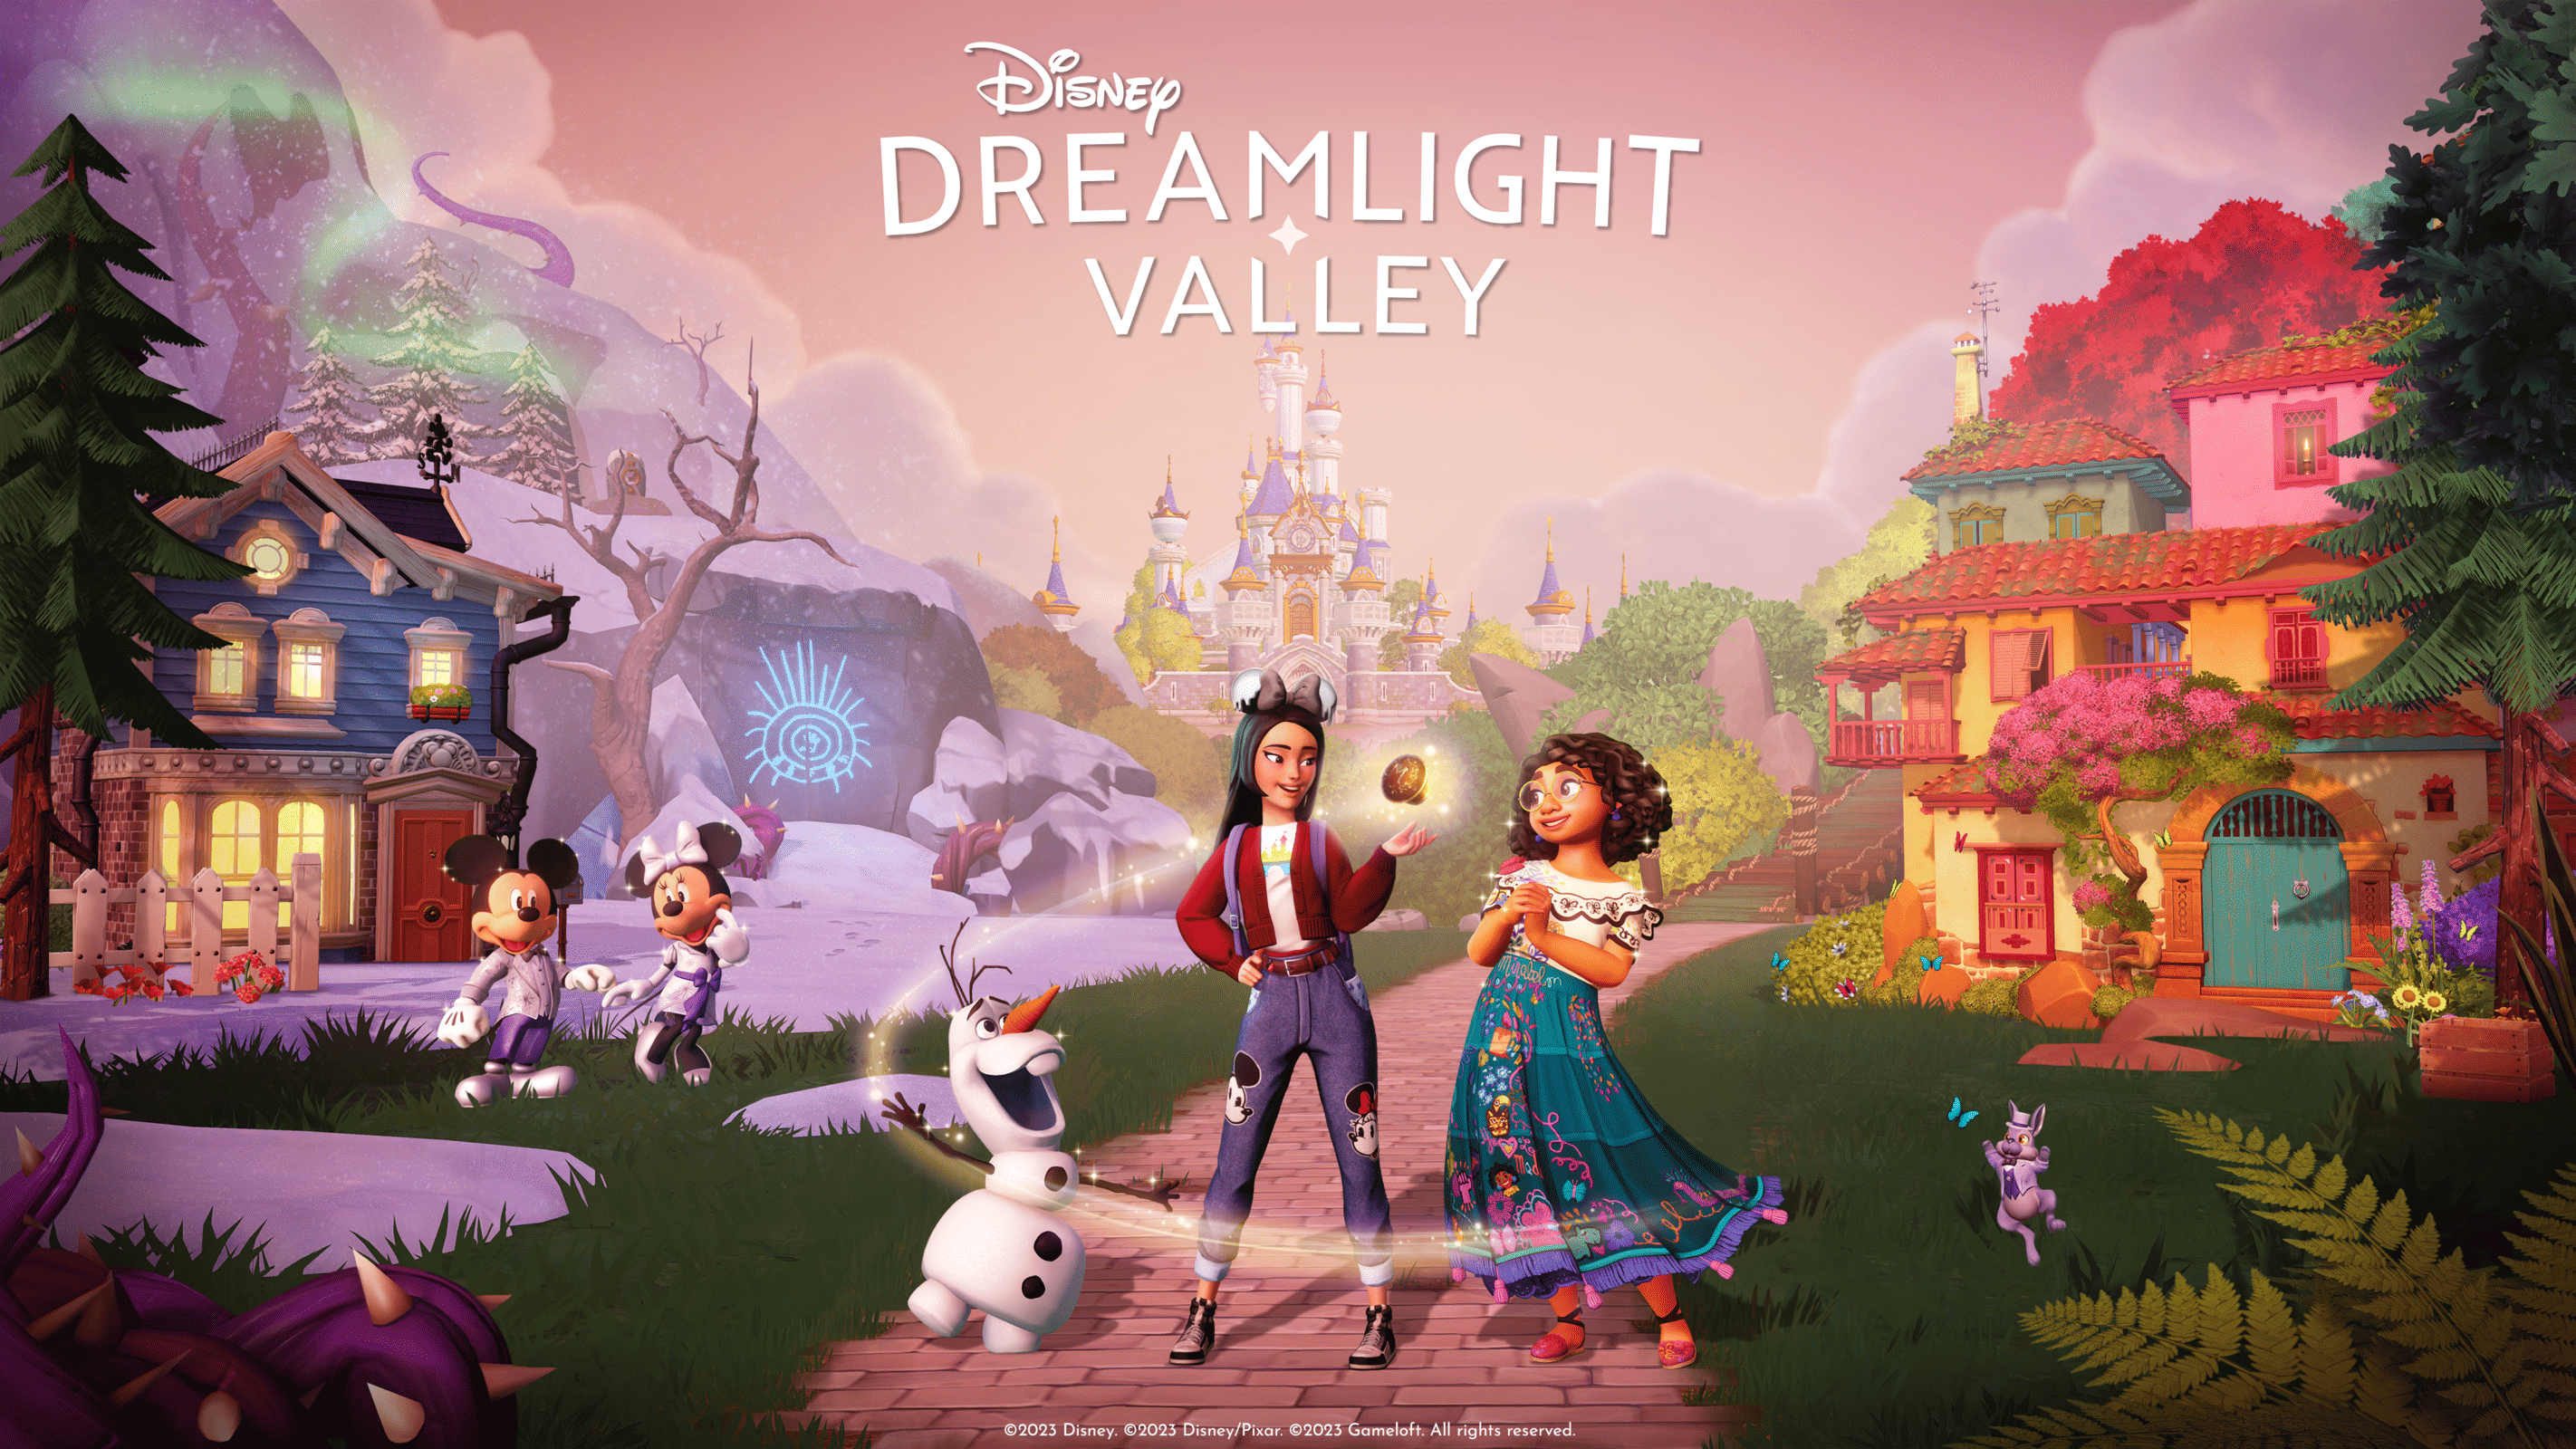 Hi Disney, can we have Belle?” “No, we have Belle at home.” :  r/DreamlightValley